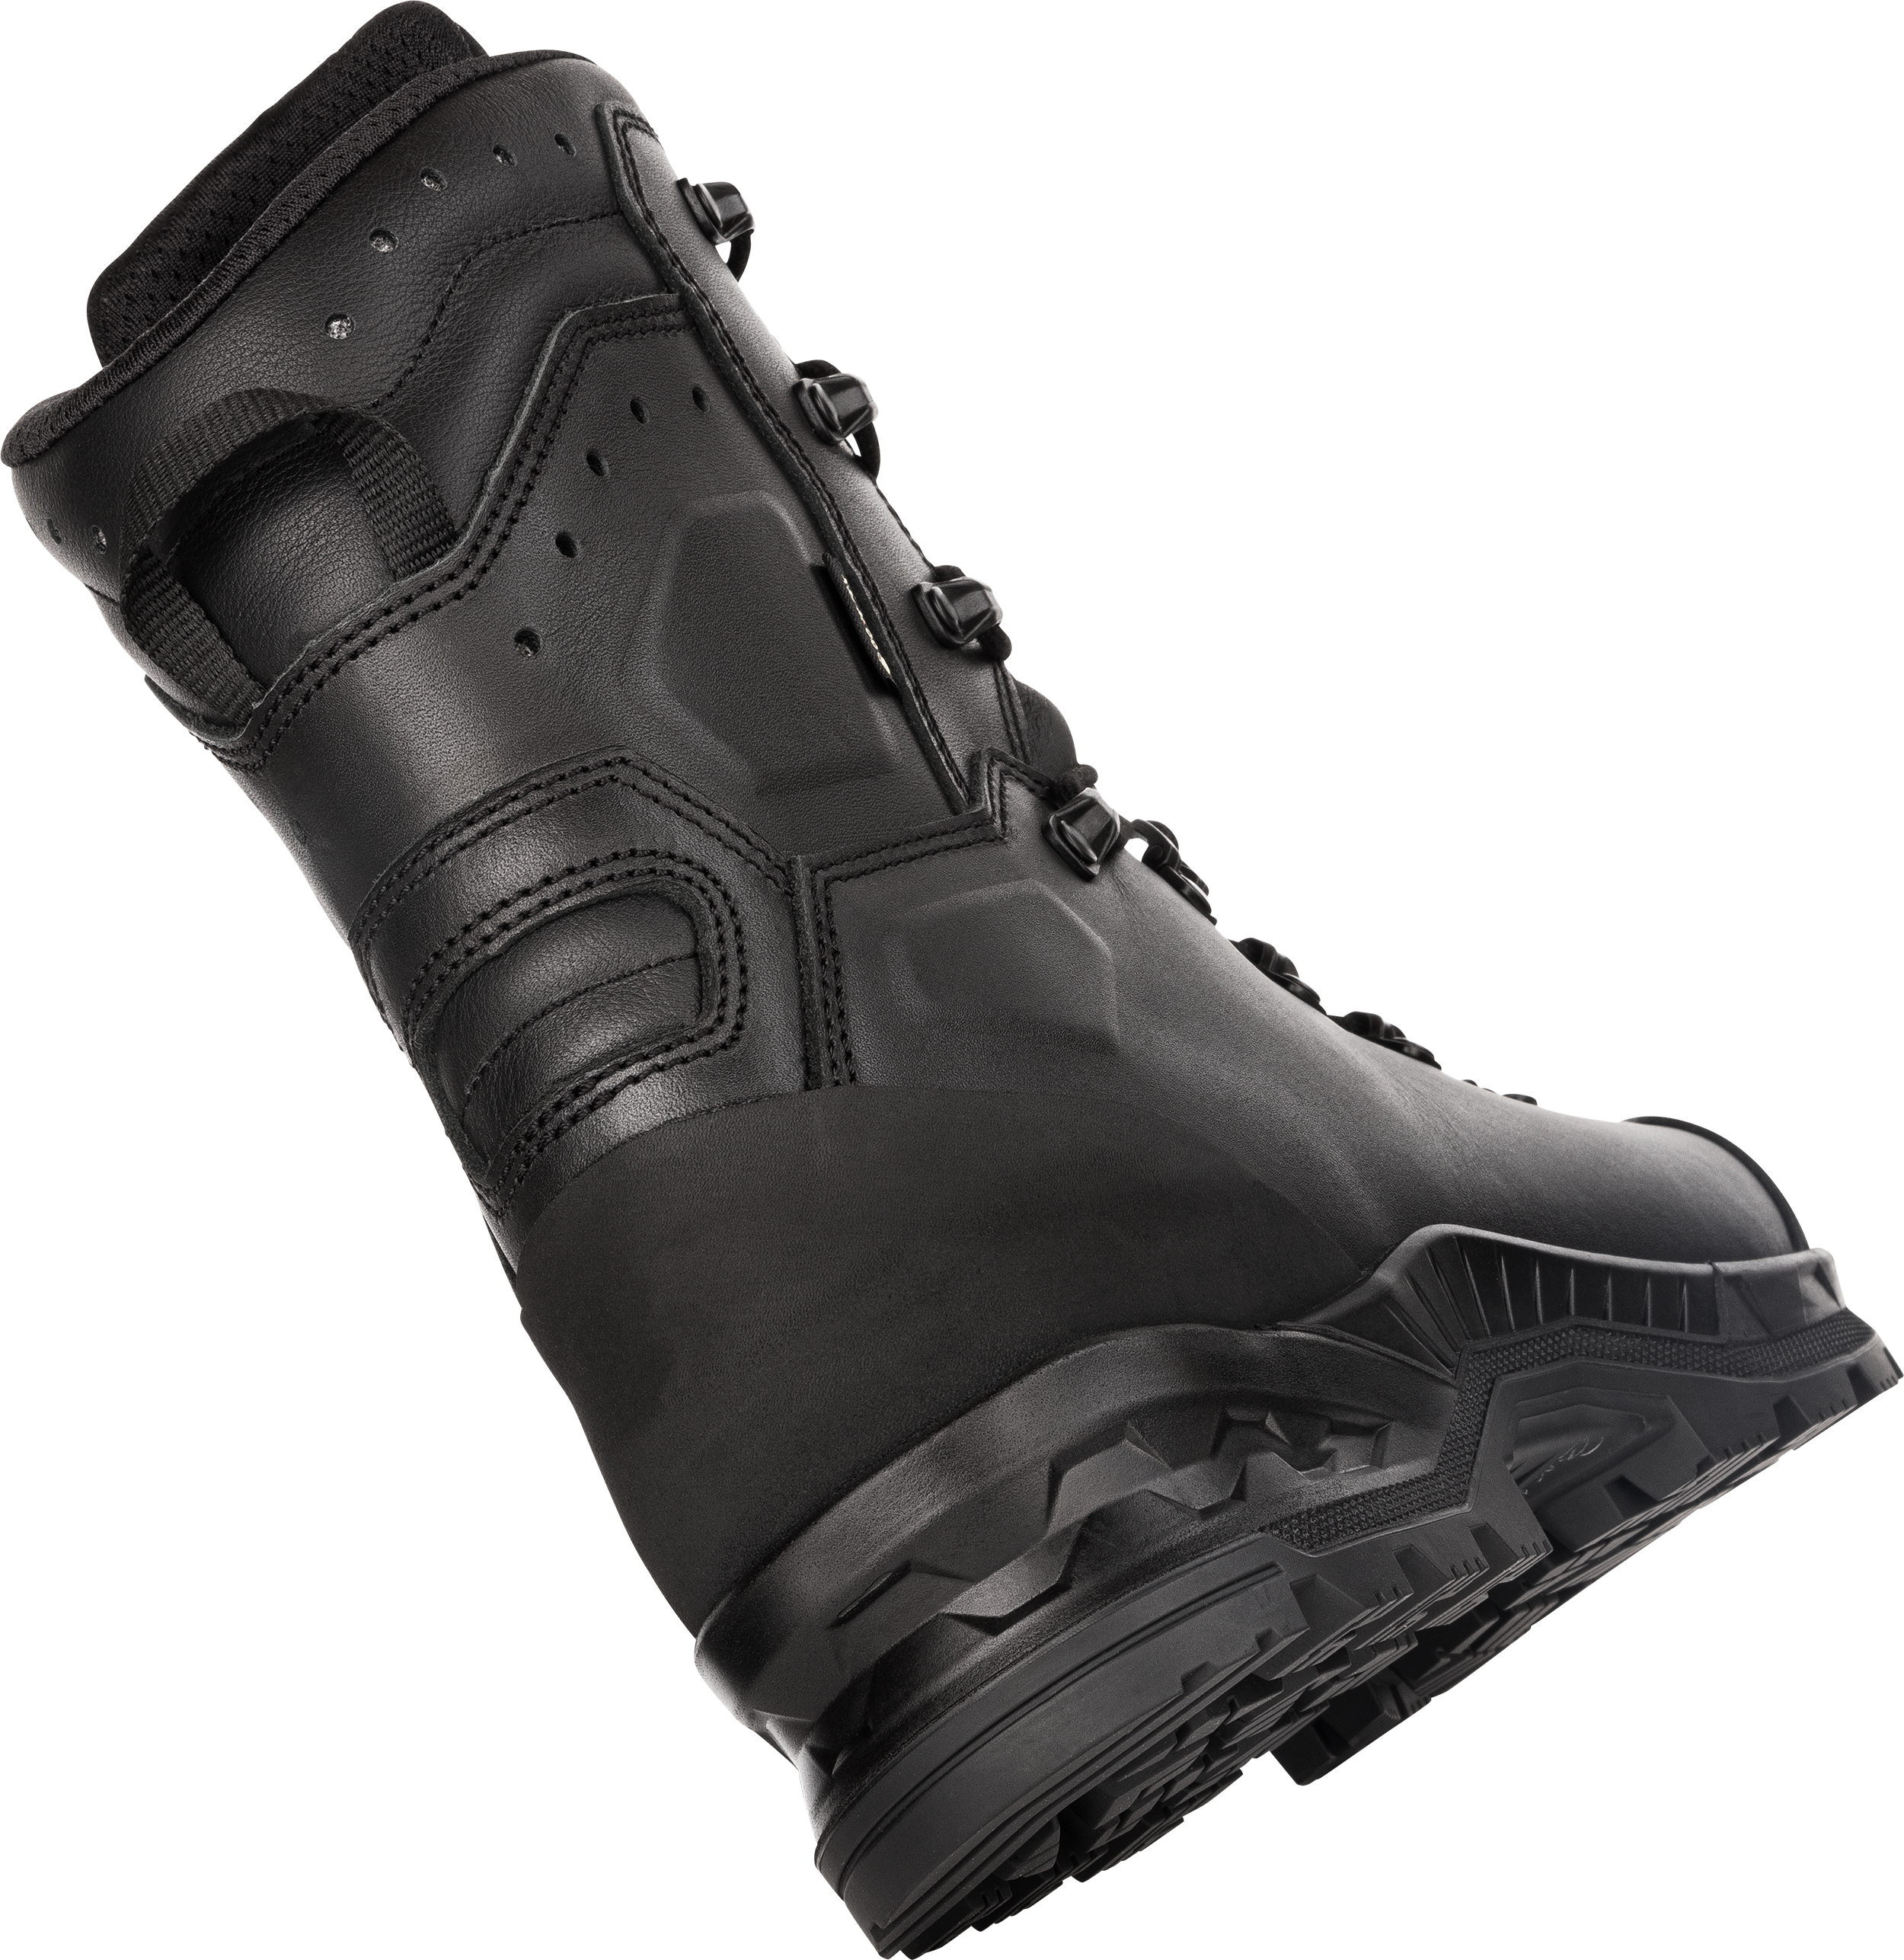 COMBAT BOOT MK2 GTX: TASK FORCE: COMBAT Shoes for Men | INT